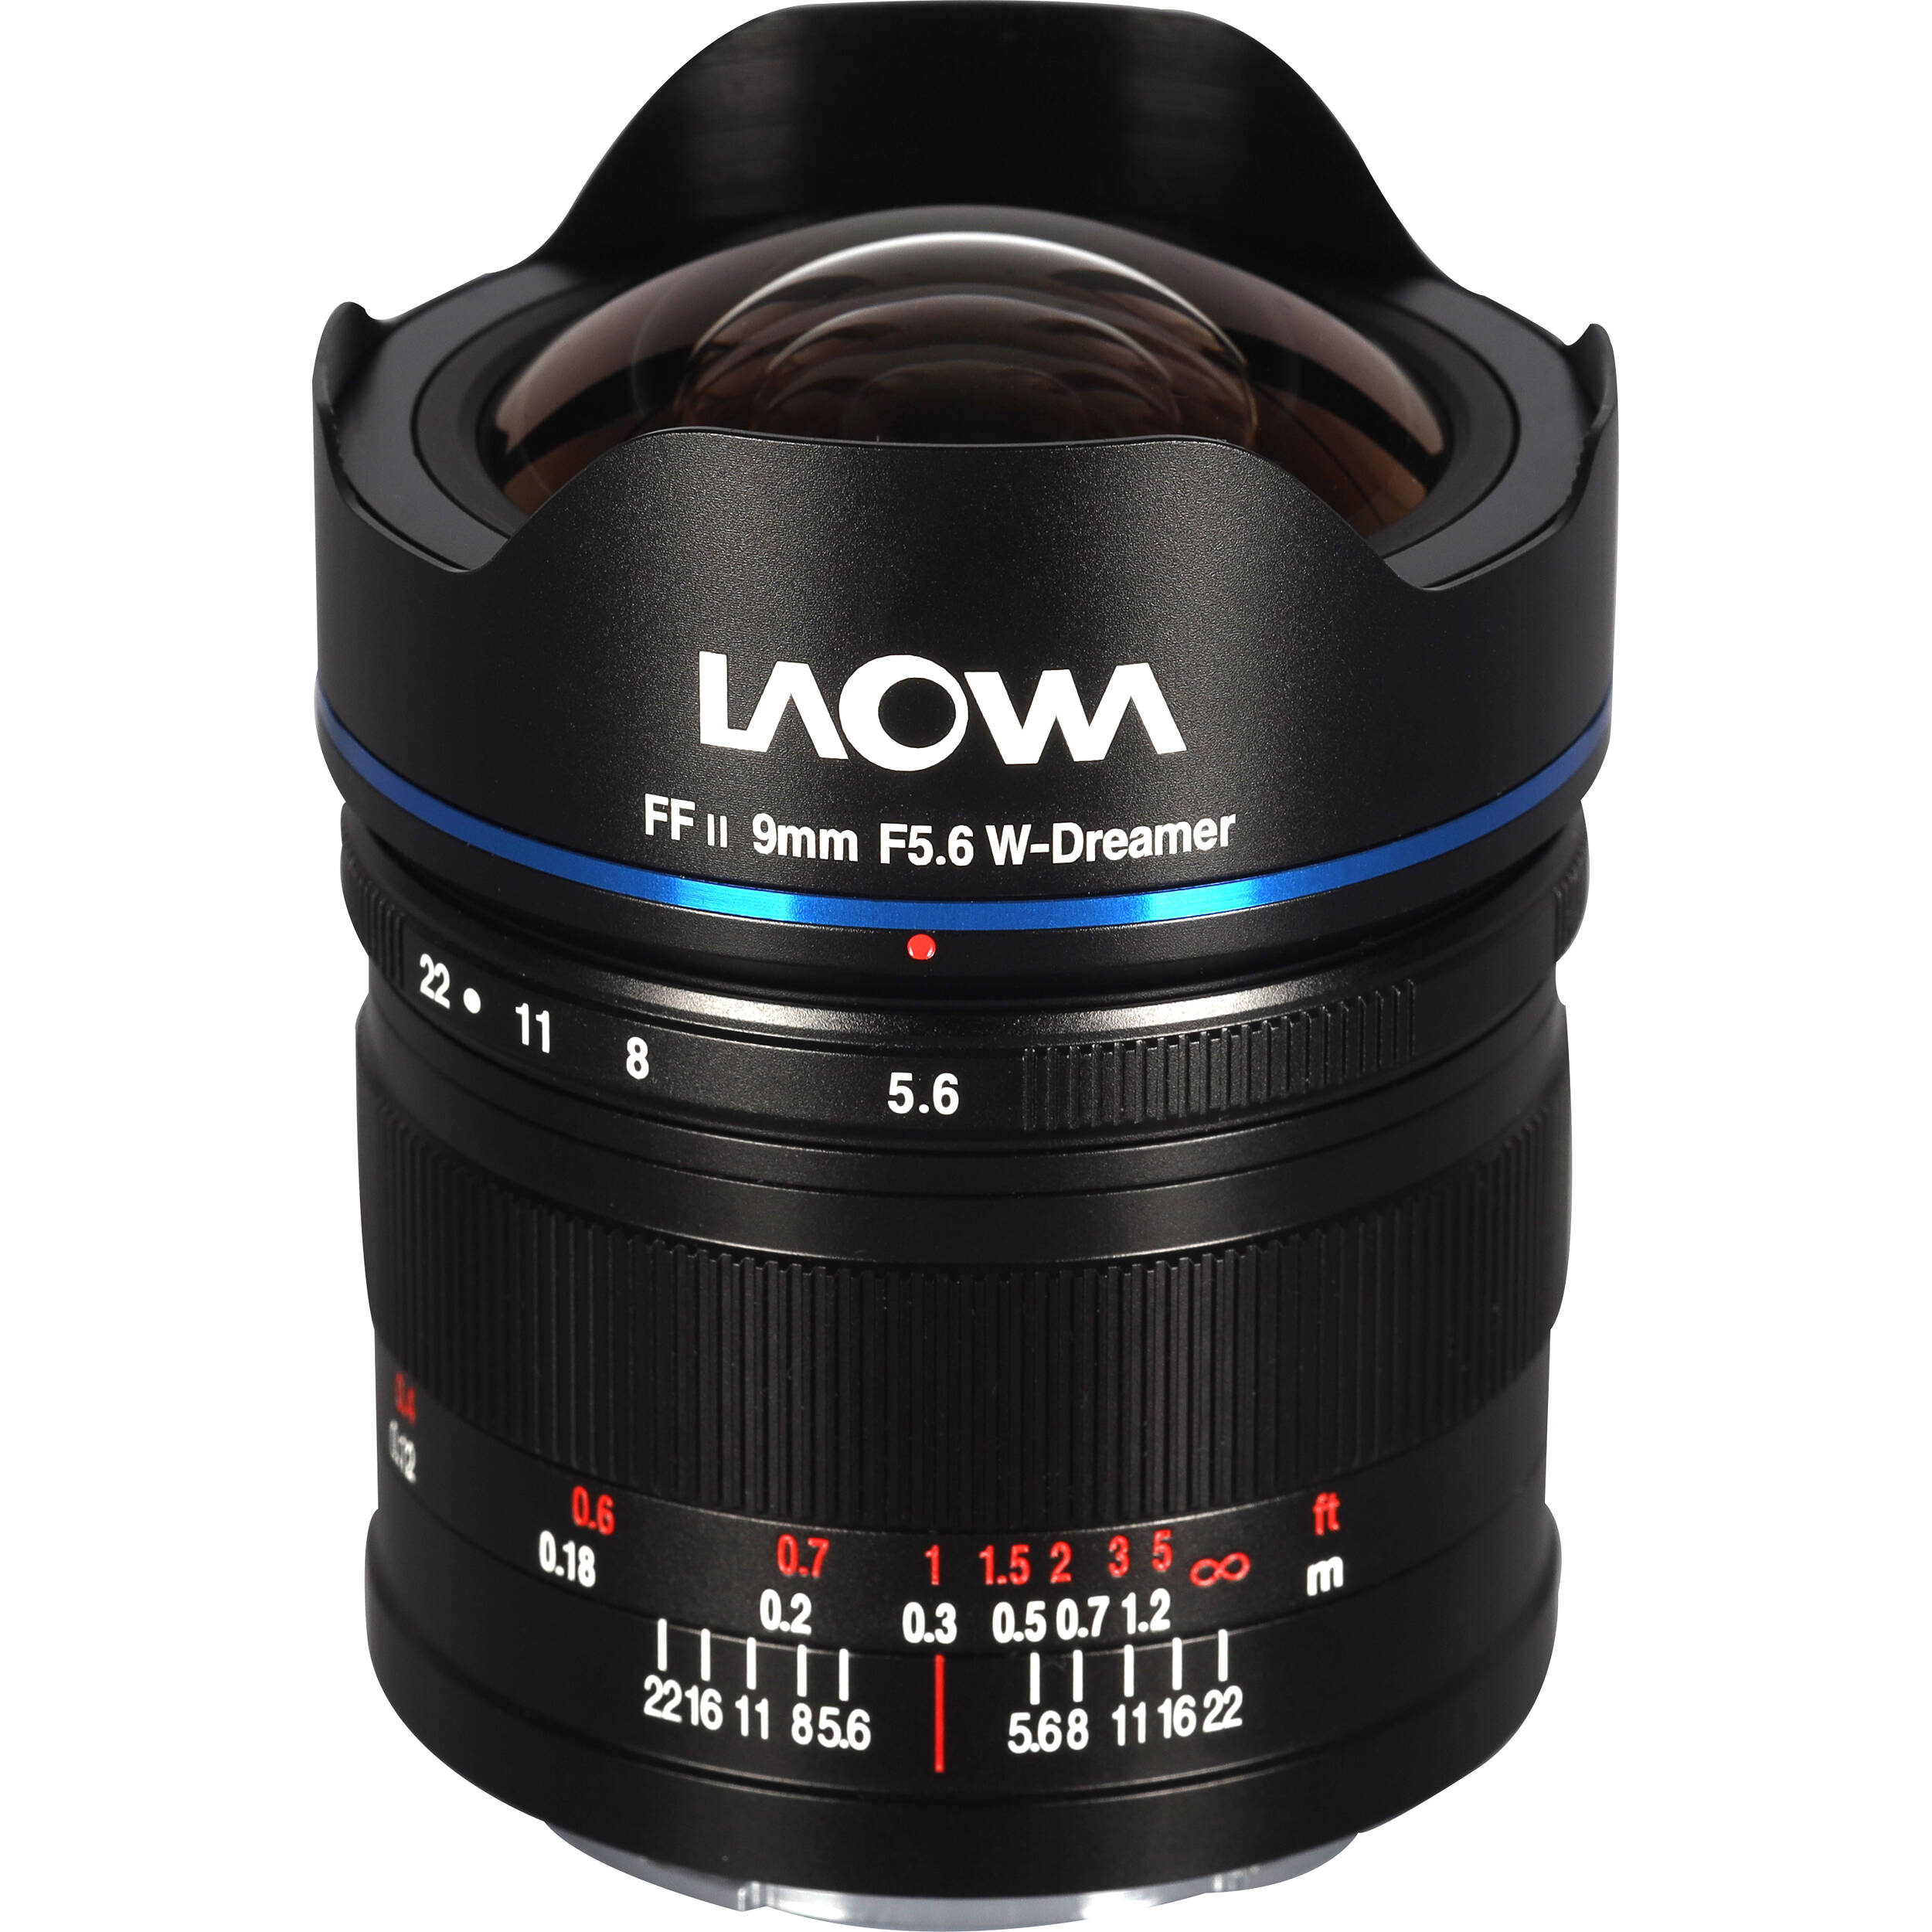 Laowa FFII 9mm F5.6 W-Dreamer 鏡頭規格、價錢及介紹文- DCFever.com